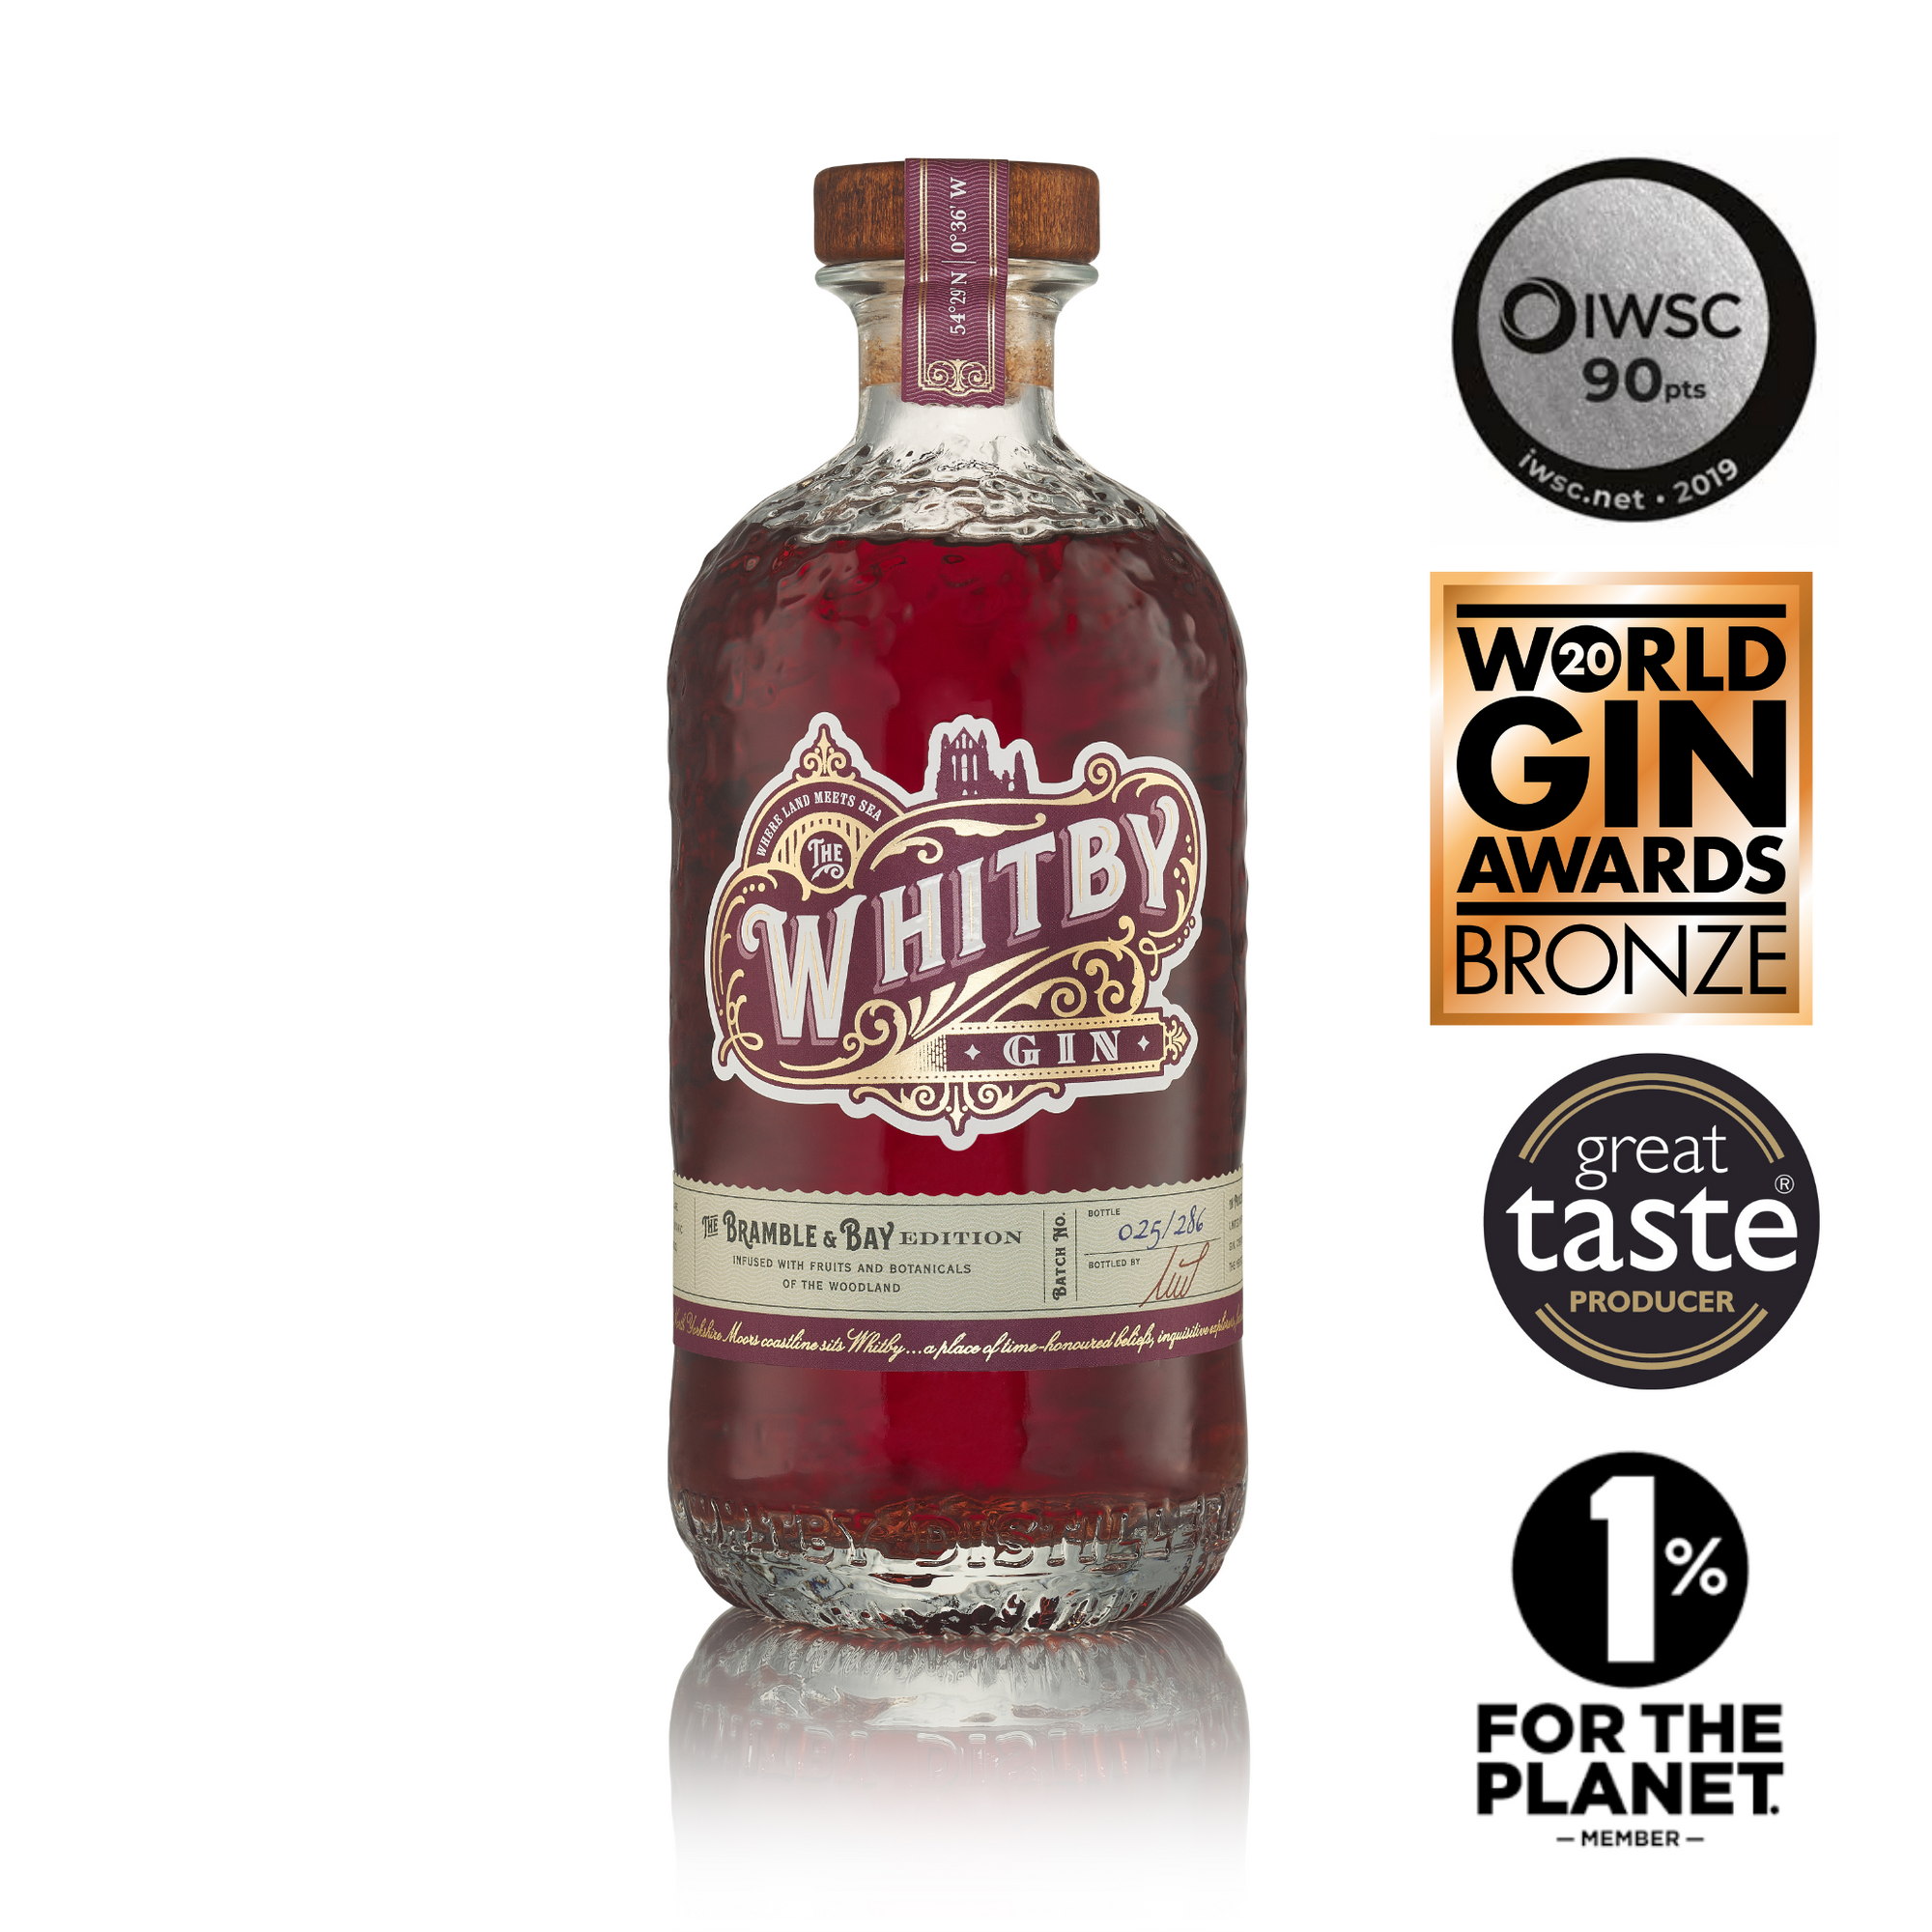 Whitby Gin - Bramble & Bay Edition